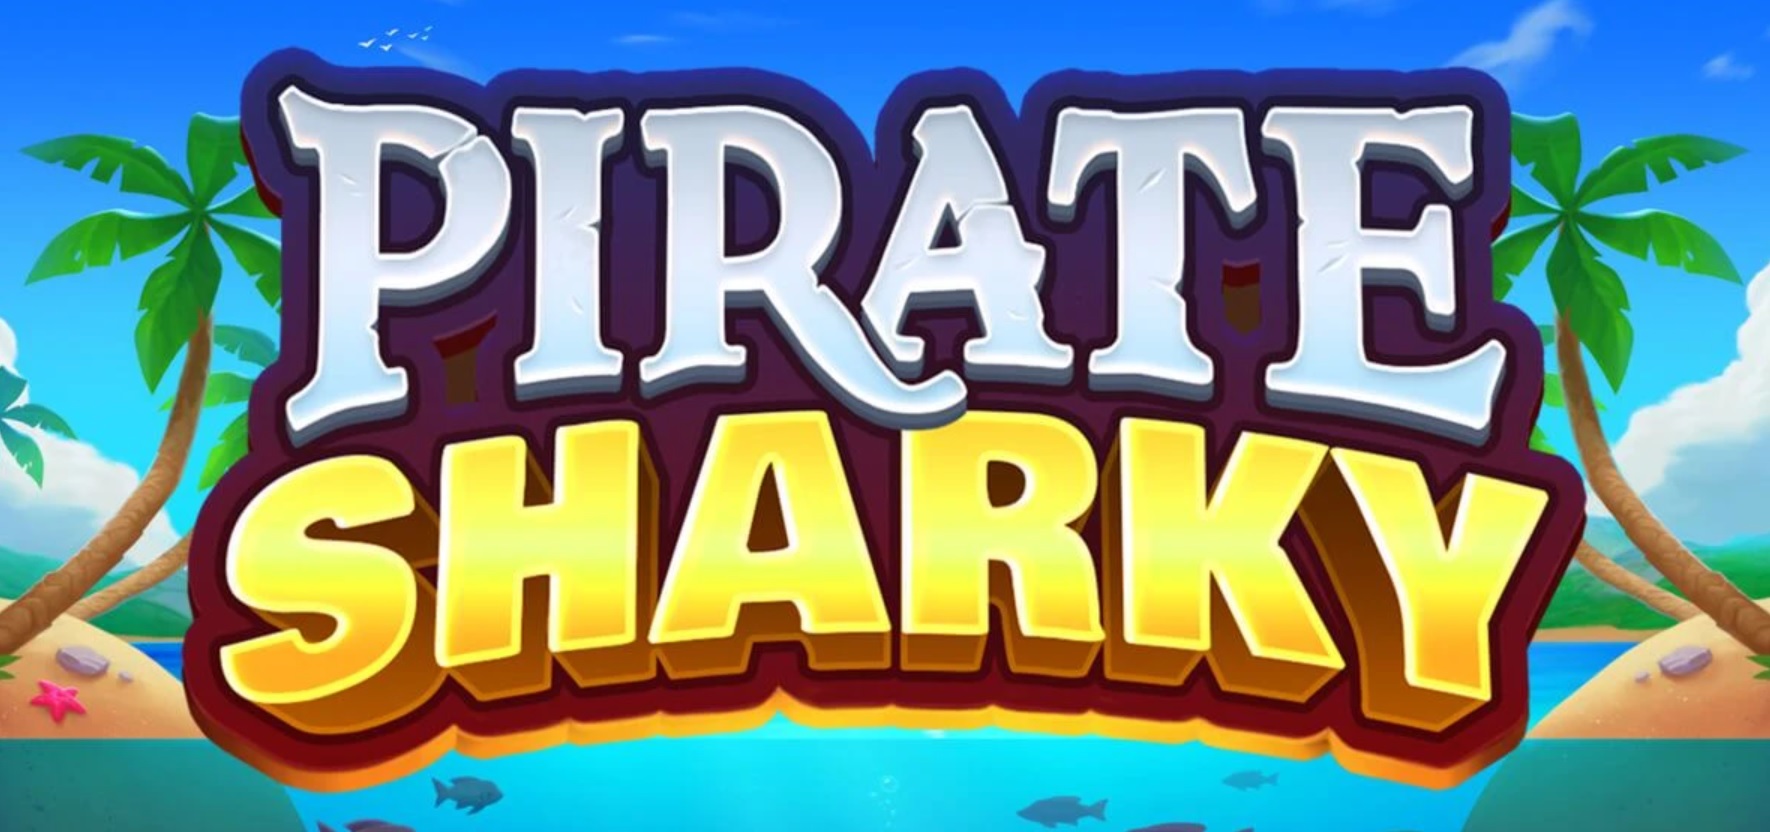 Pirate sharky slot logo